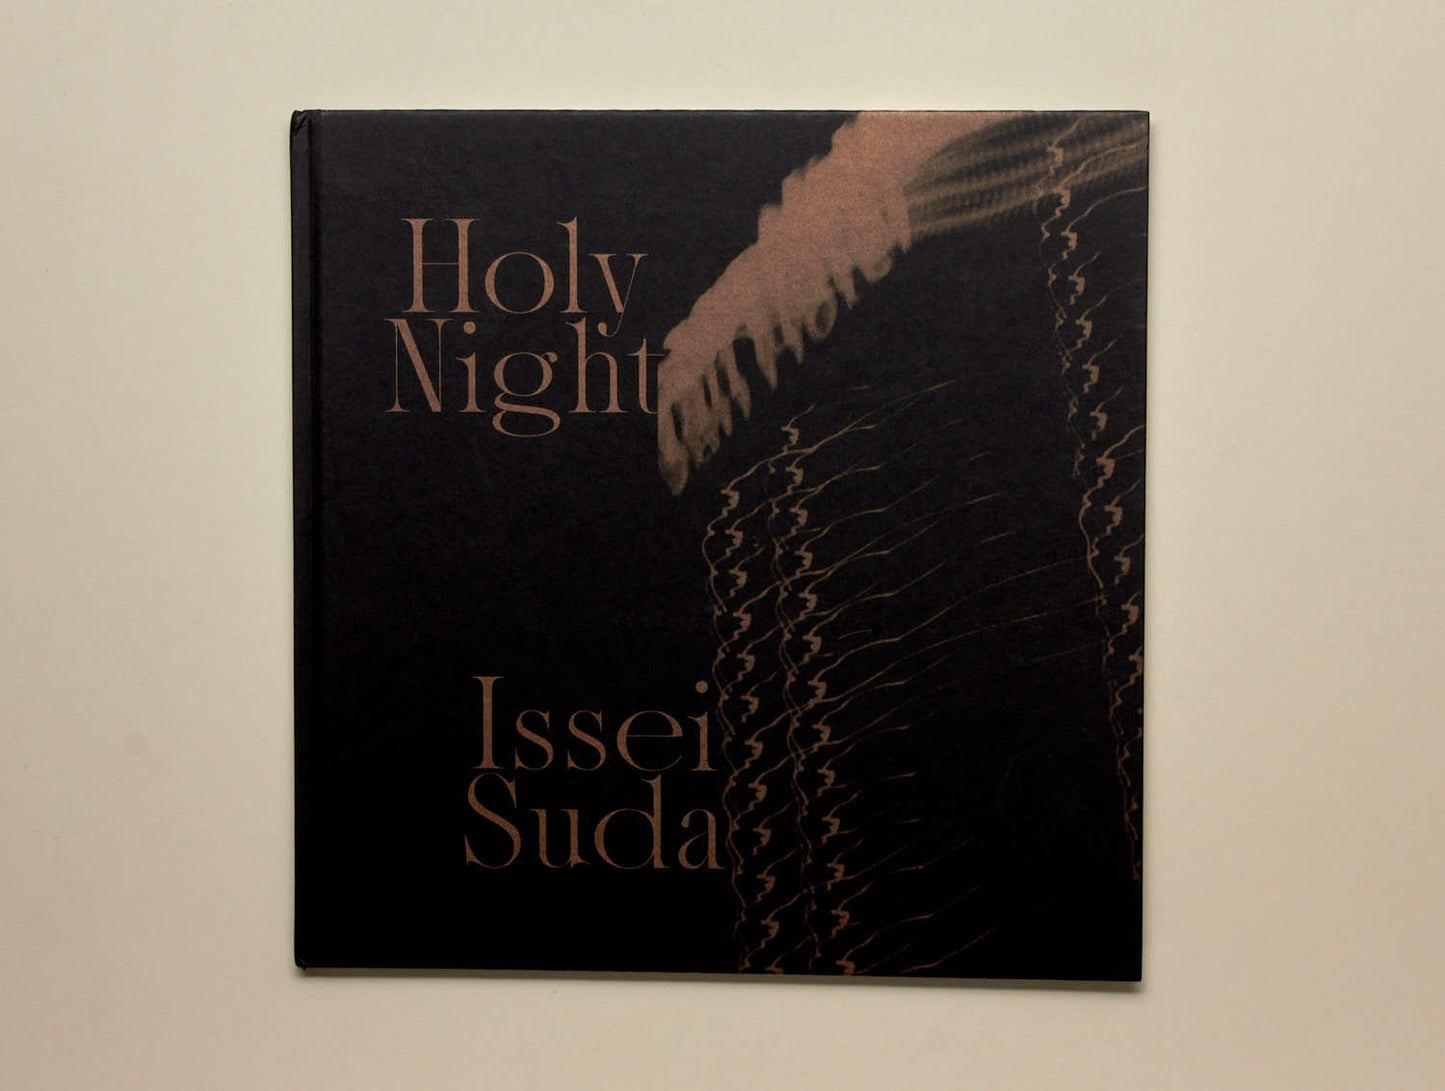 Issei Suda, Holy Night